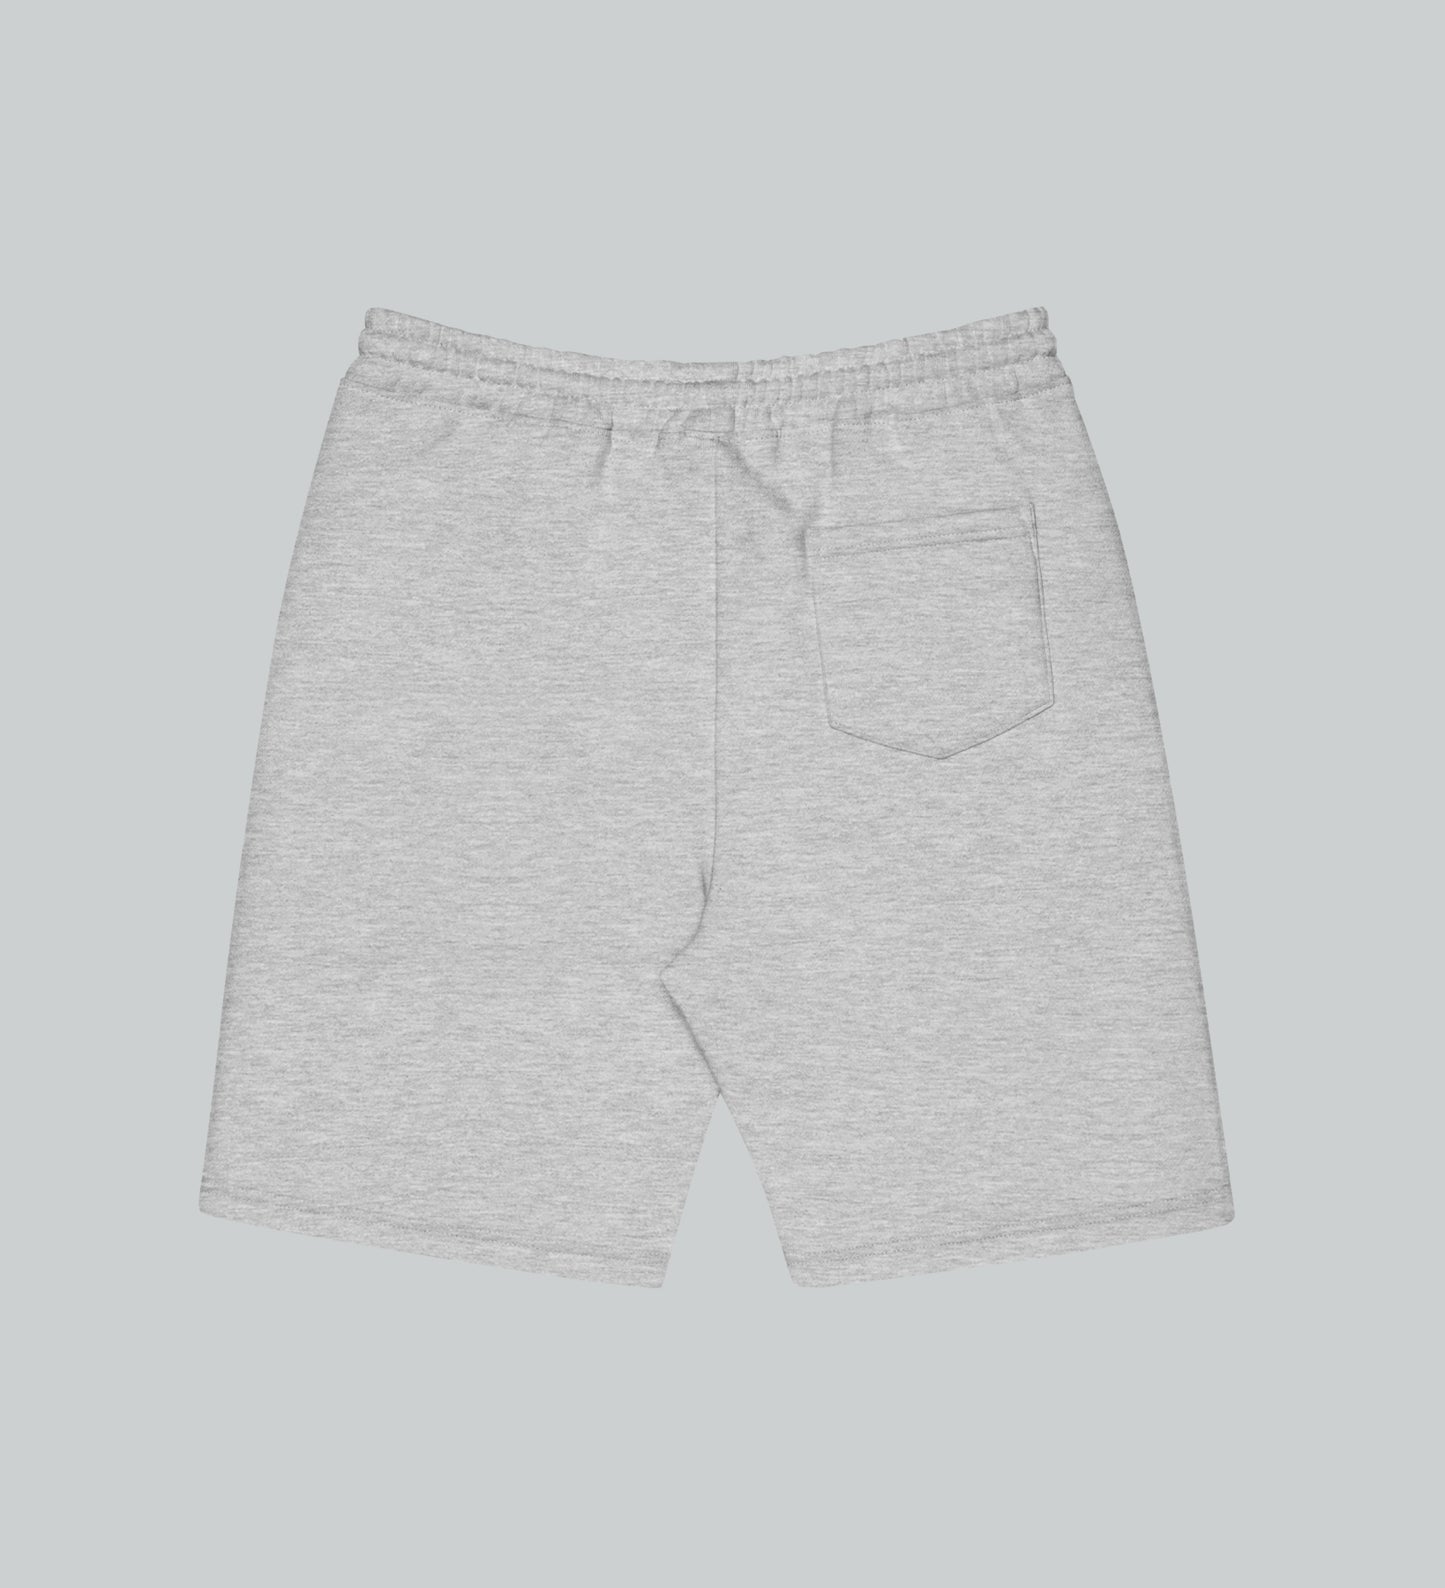 Atari® Camp Fleece Shorts